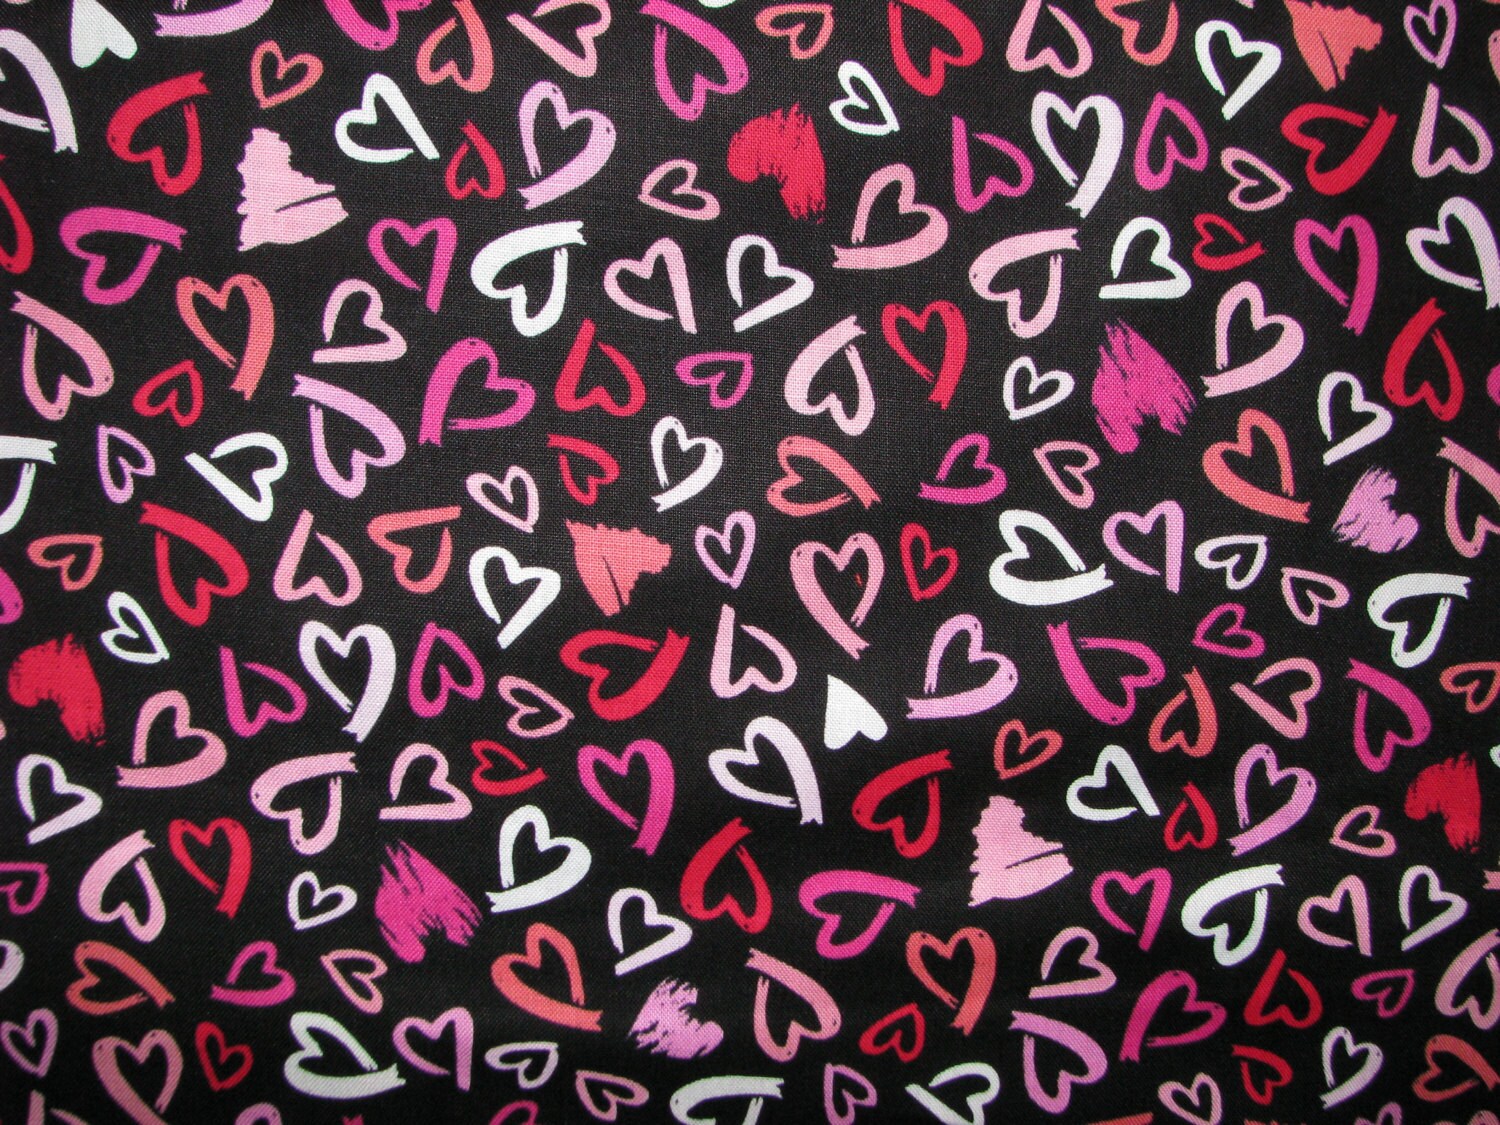 Lipstick Hearts cotton fabric black with hearts drawn in